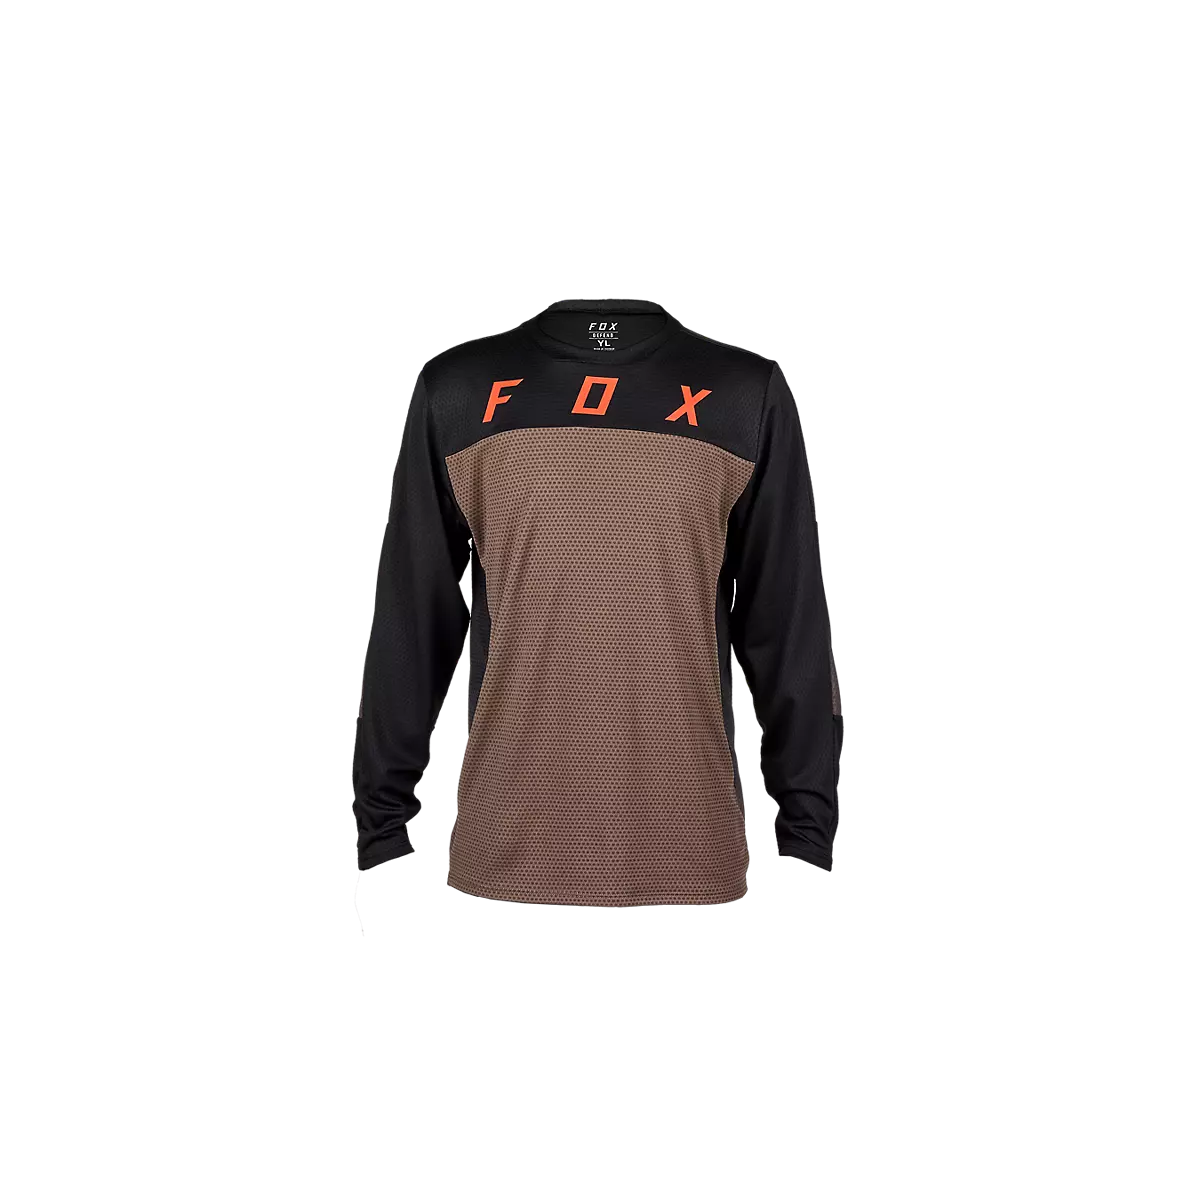 Camiseta manga larga con tallaje niño para bicicleta enduro o descenso Fox Defend Race negro/marrón| 6-14 años 31075-117